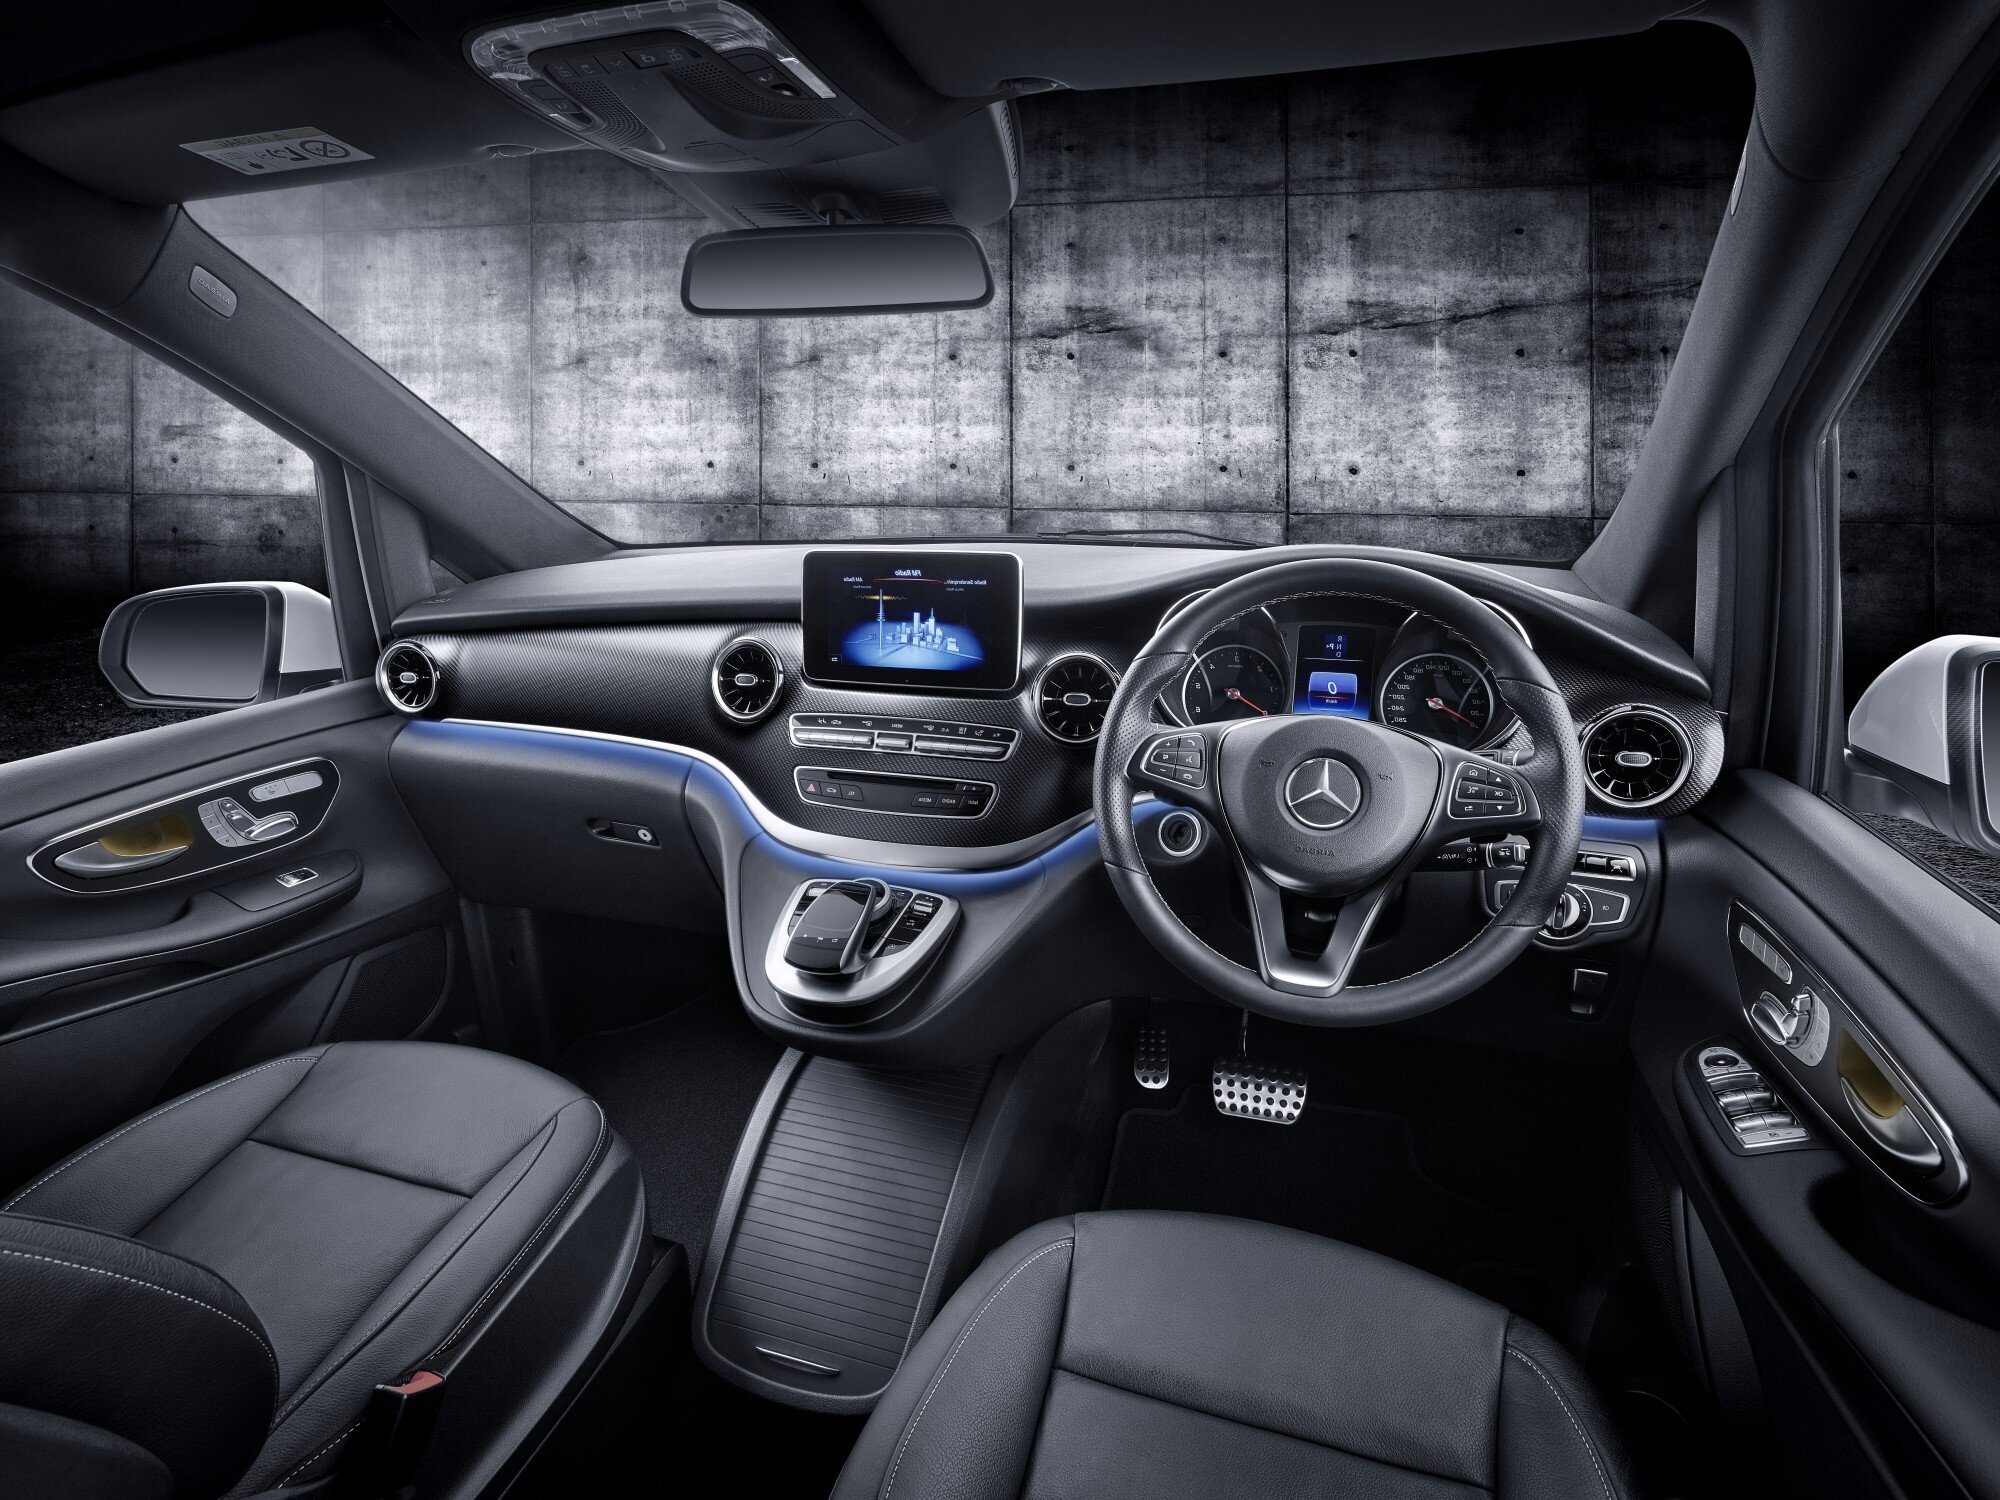 v-class-interior-dashboard-luxury-executive-travel.jpg